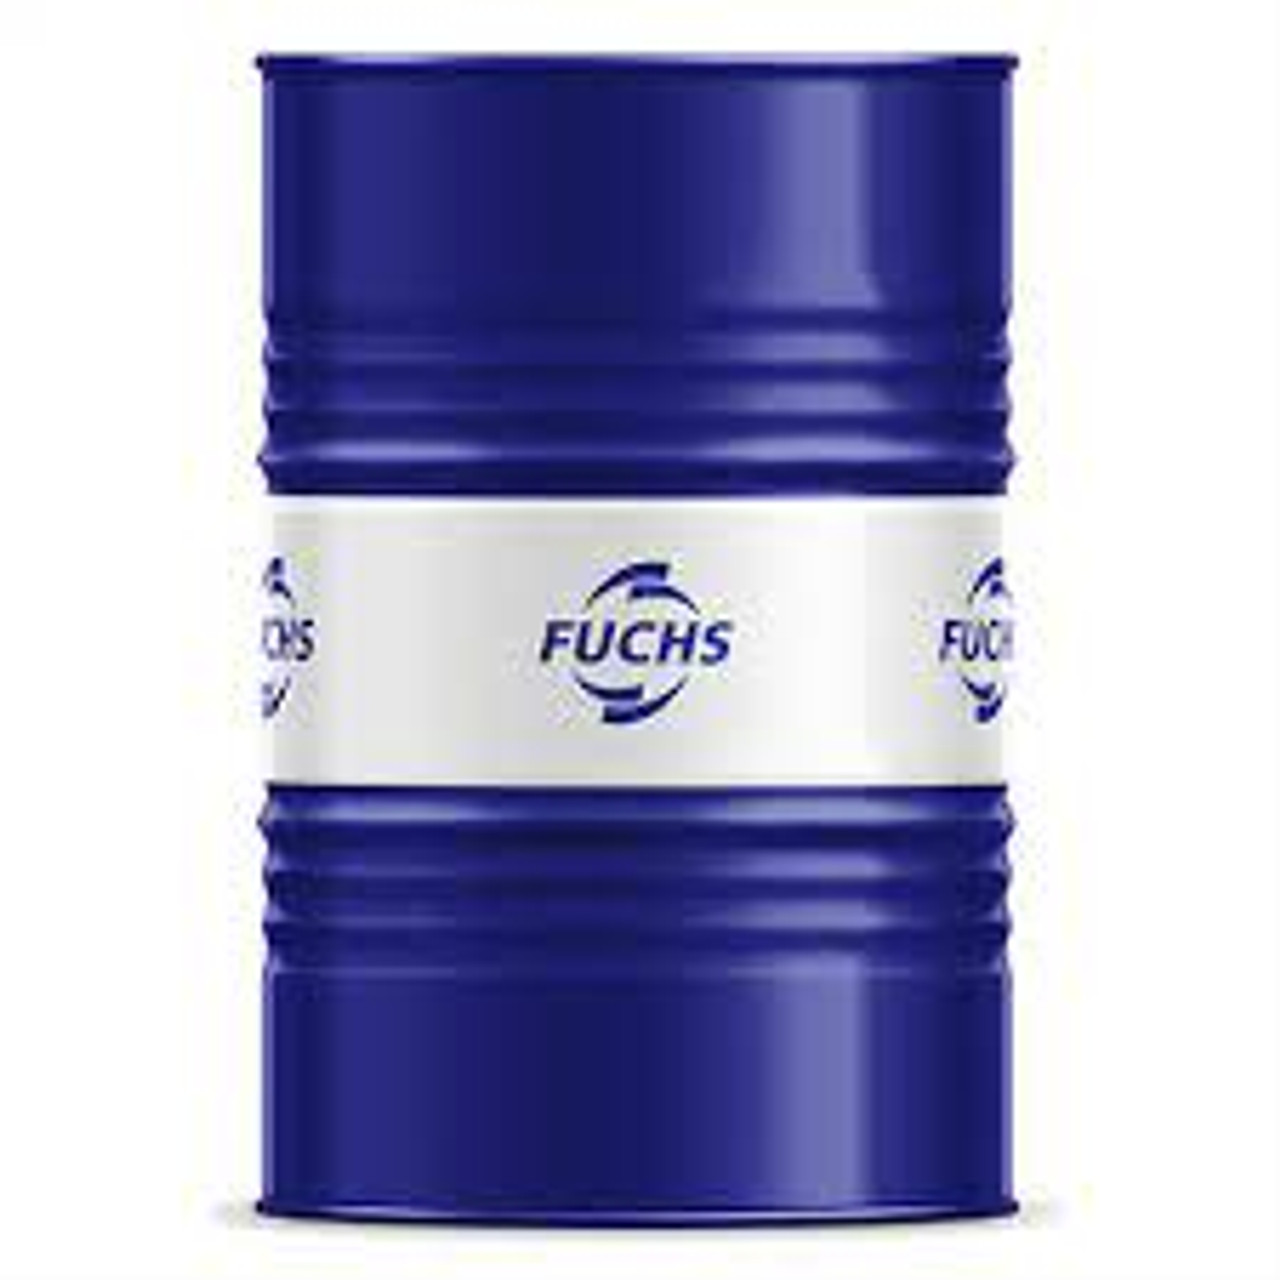 Fuchs Reonlin Unisyn CLP 320 - 55 gallon Drum